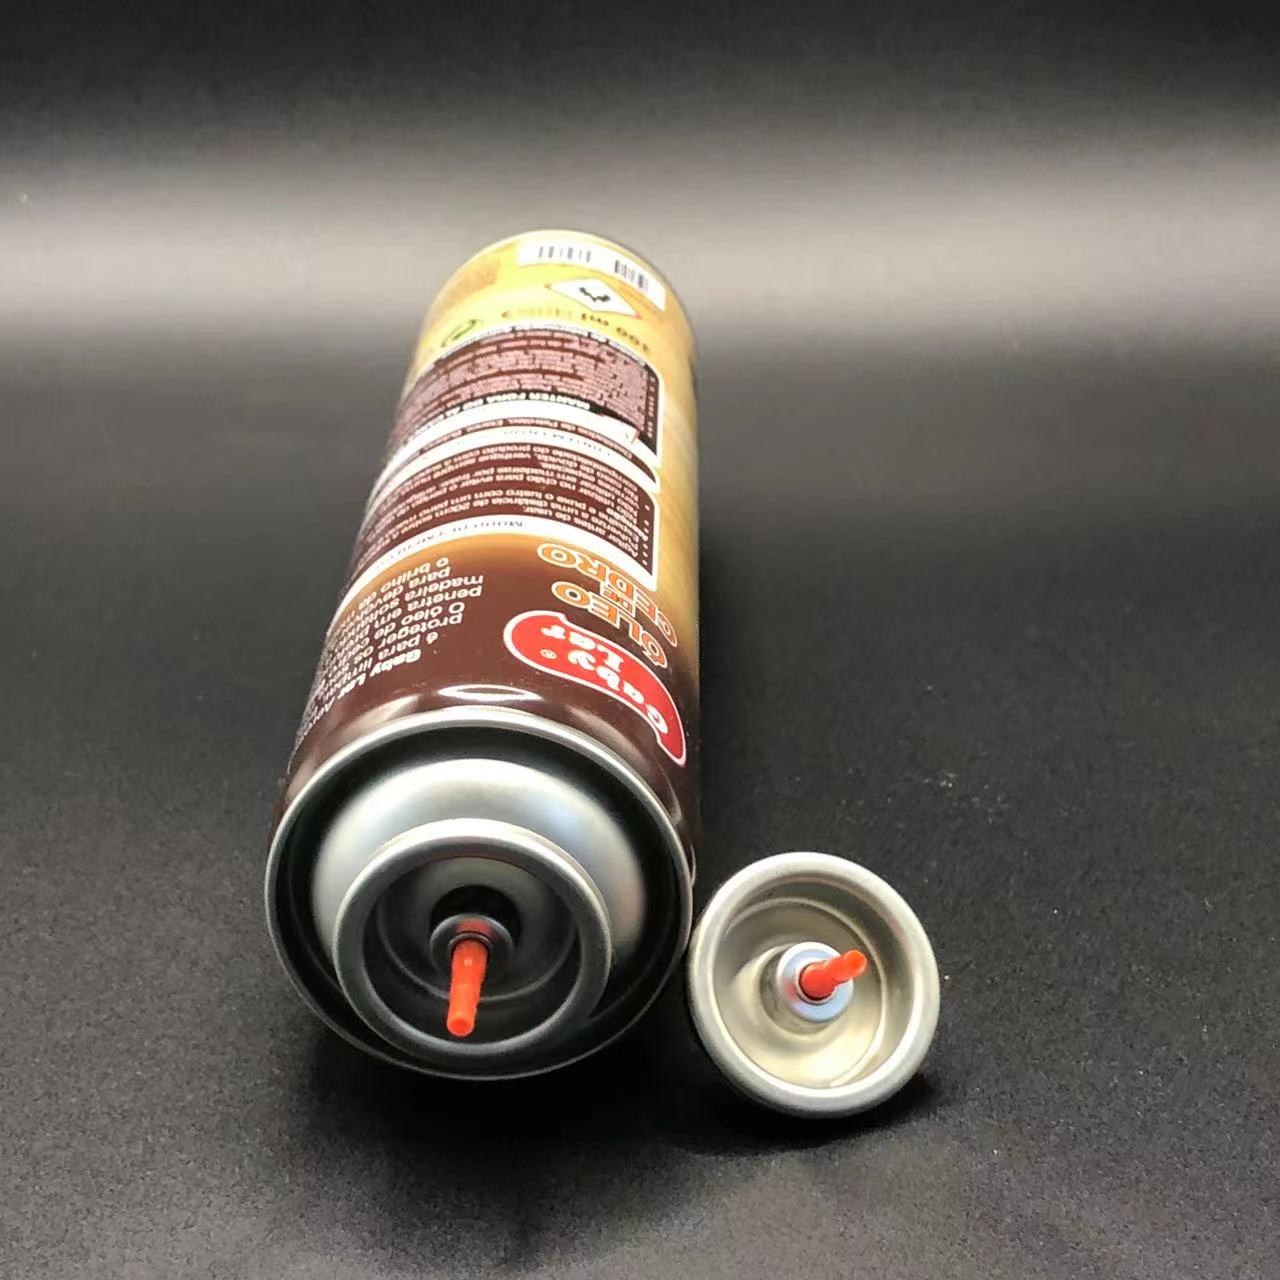 Universal Butane Gas Lighter Refill Kit Kit ដំណោះស្រាយល្អសម្រាប់គ្រប់ម៉ូដែលស្រាលជាងមុន